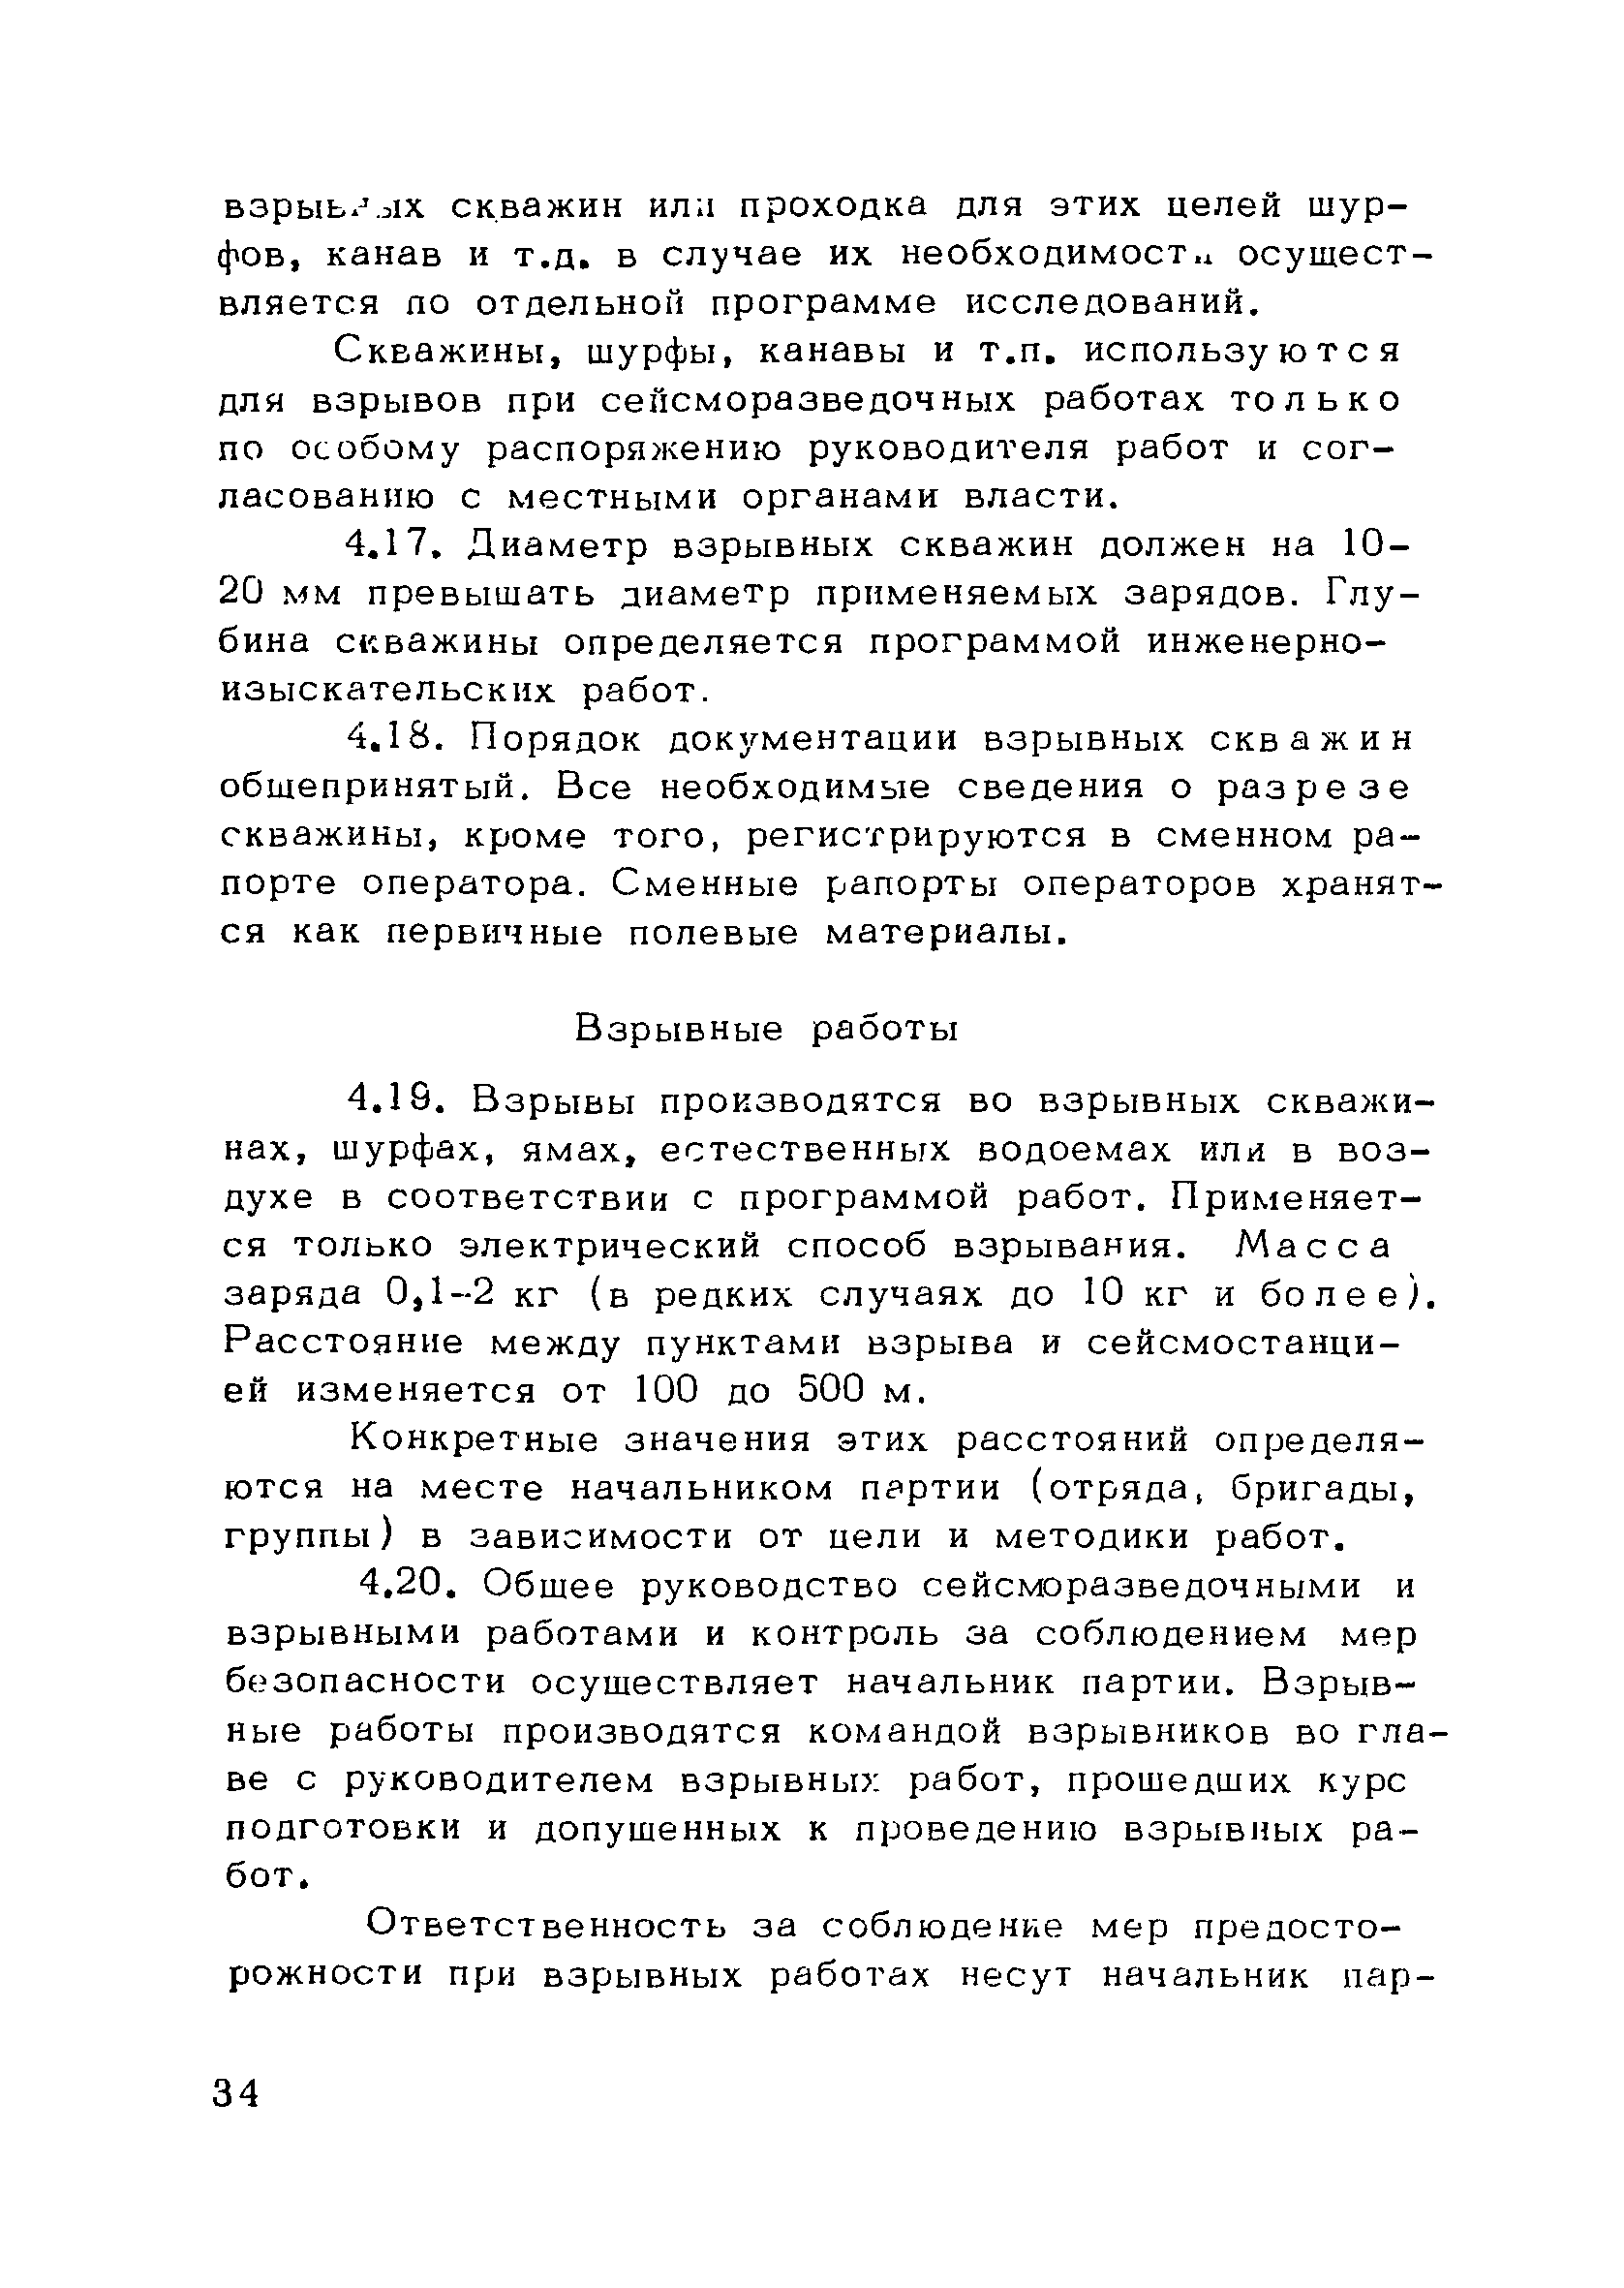 РСН 45-77/Госстрой РСФСР